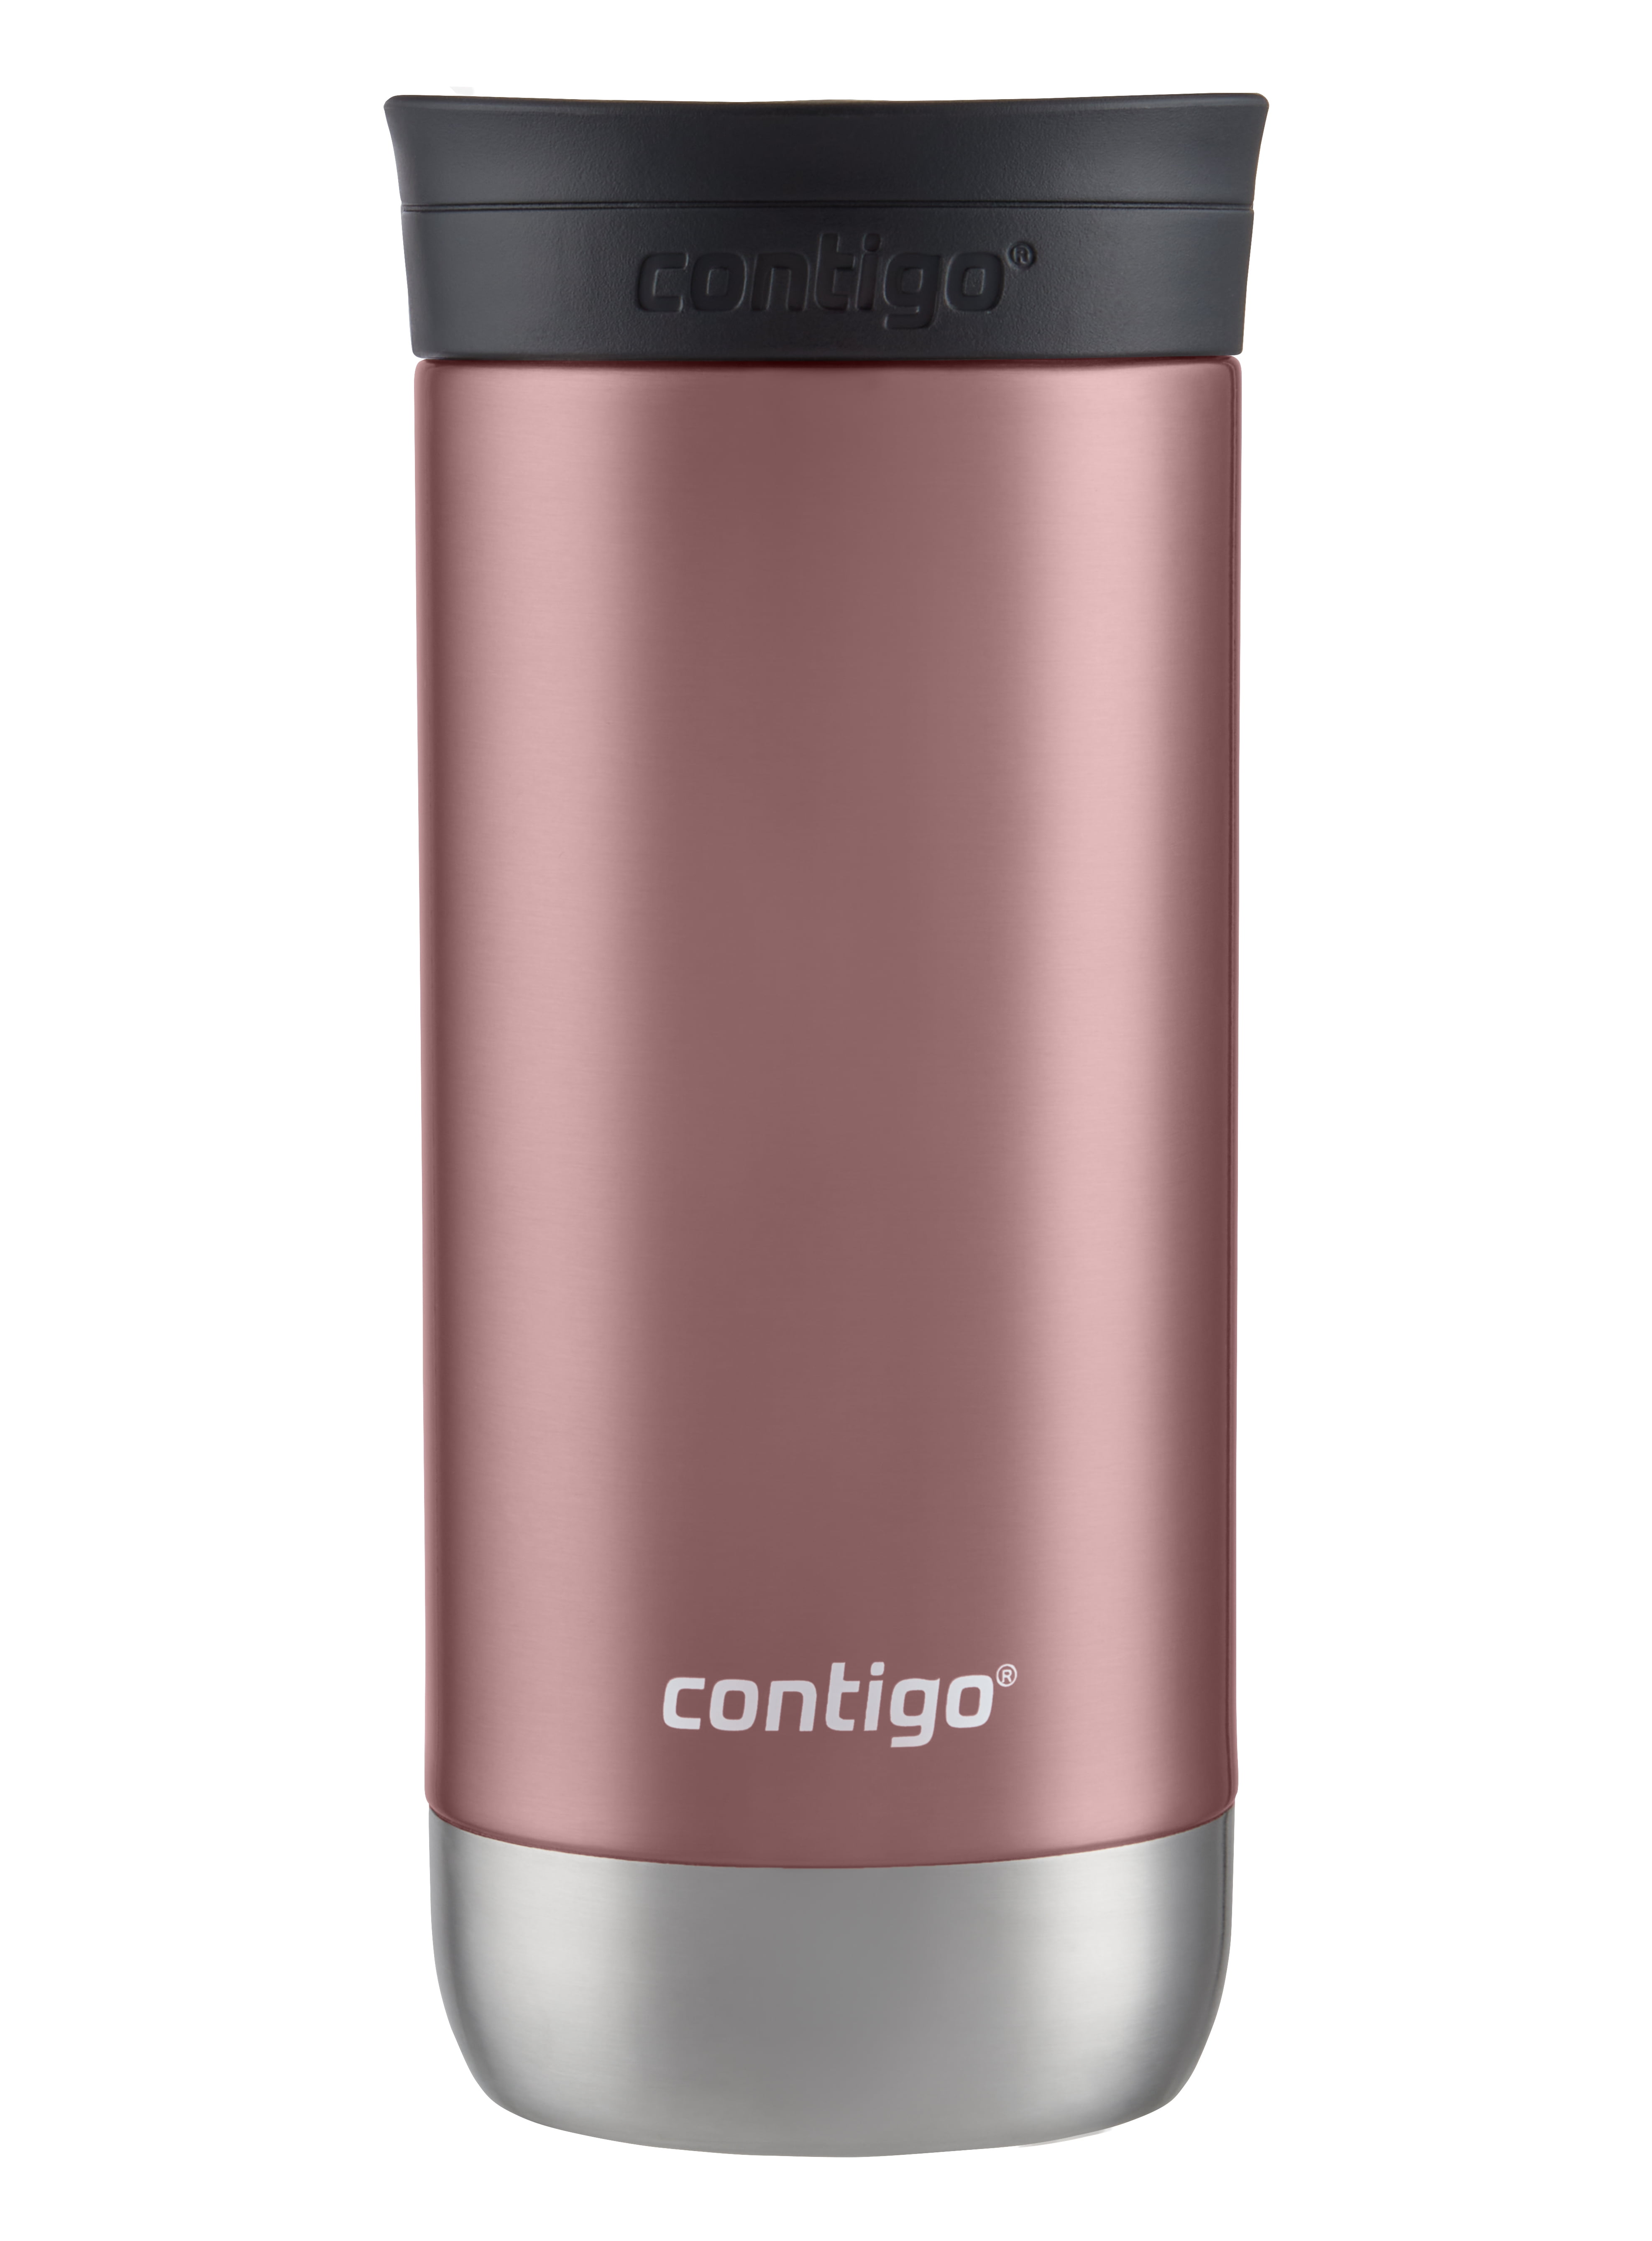 Contigo Huron 2.0 Stainless Steel Travel Mug with SNAPSEAL Lid, Pink, 16 fl oz.